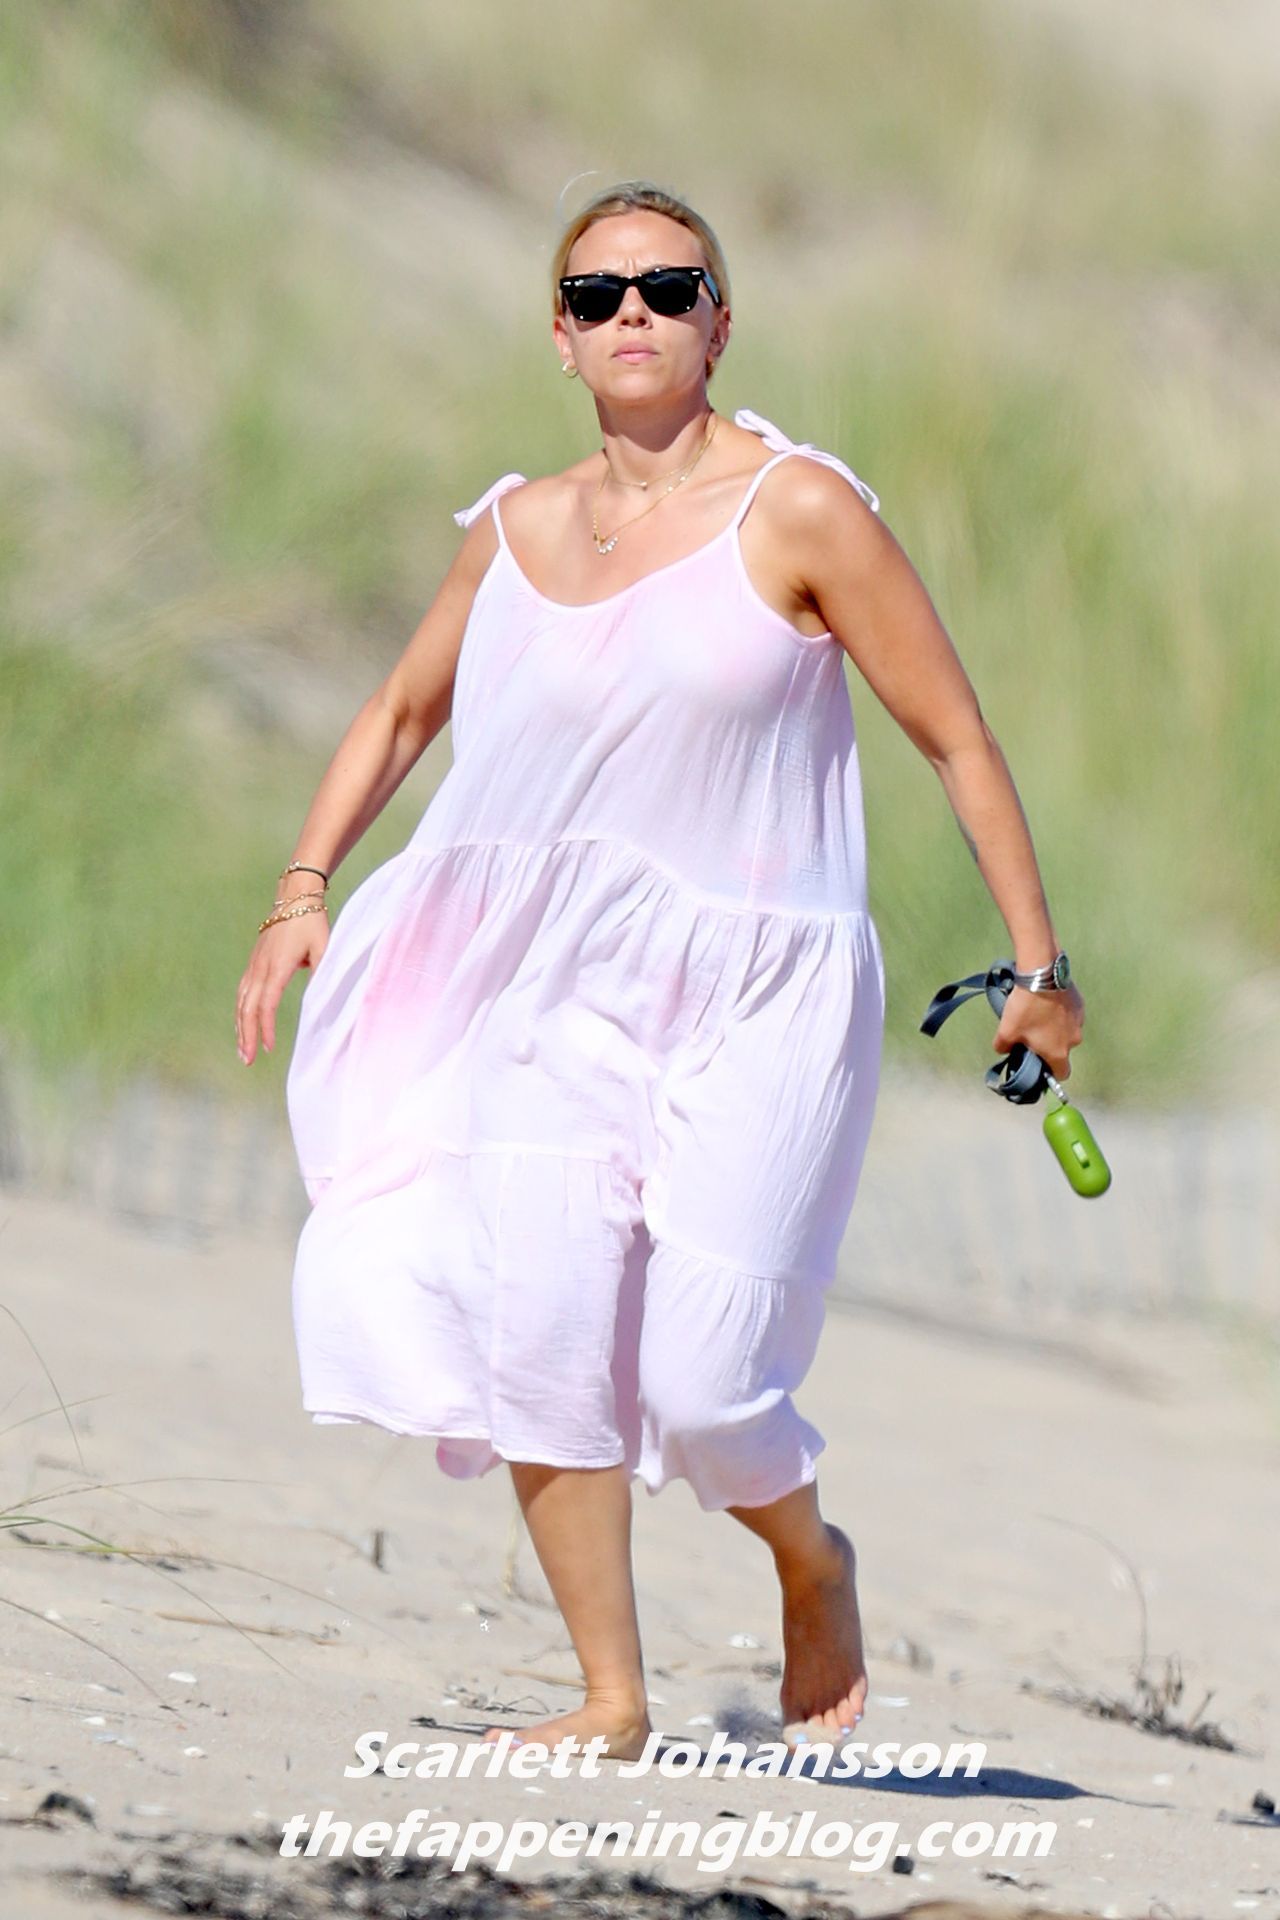 Scarlett Johans
son is Spotted on the Beach in The Hamptons (33 Photos)